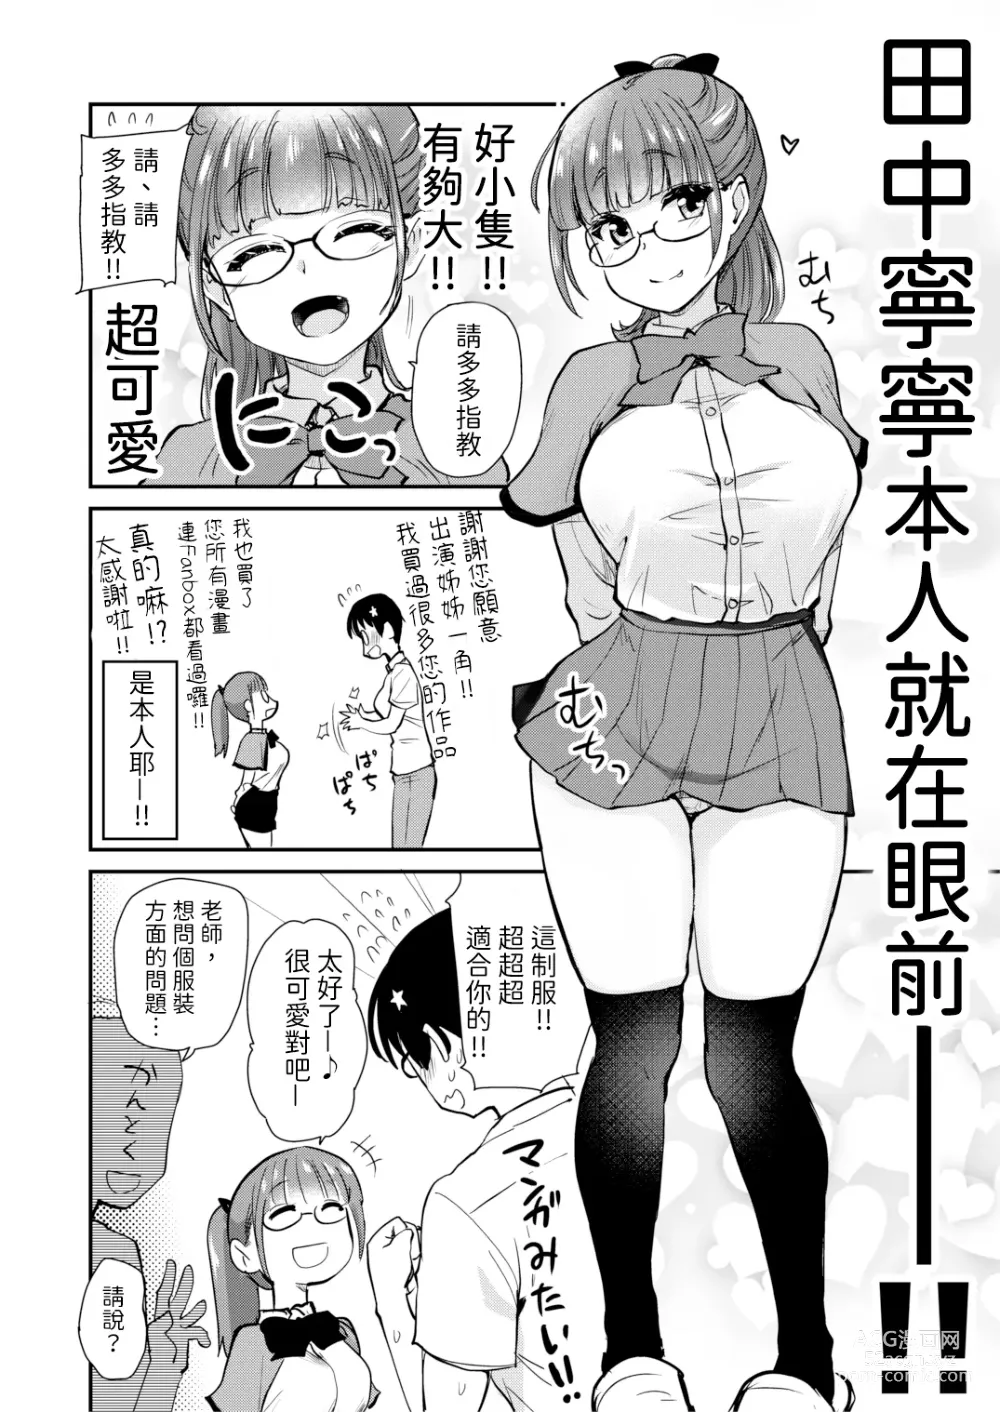 Page 14 of doujinshi 我畫的色情漫畫被AV真人化了!? 因為機會難得所以去拍攝現場觀摩之後的心得感想